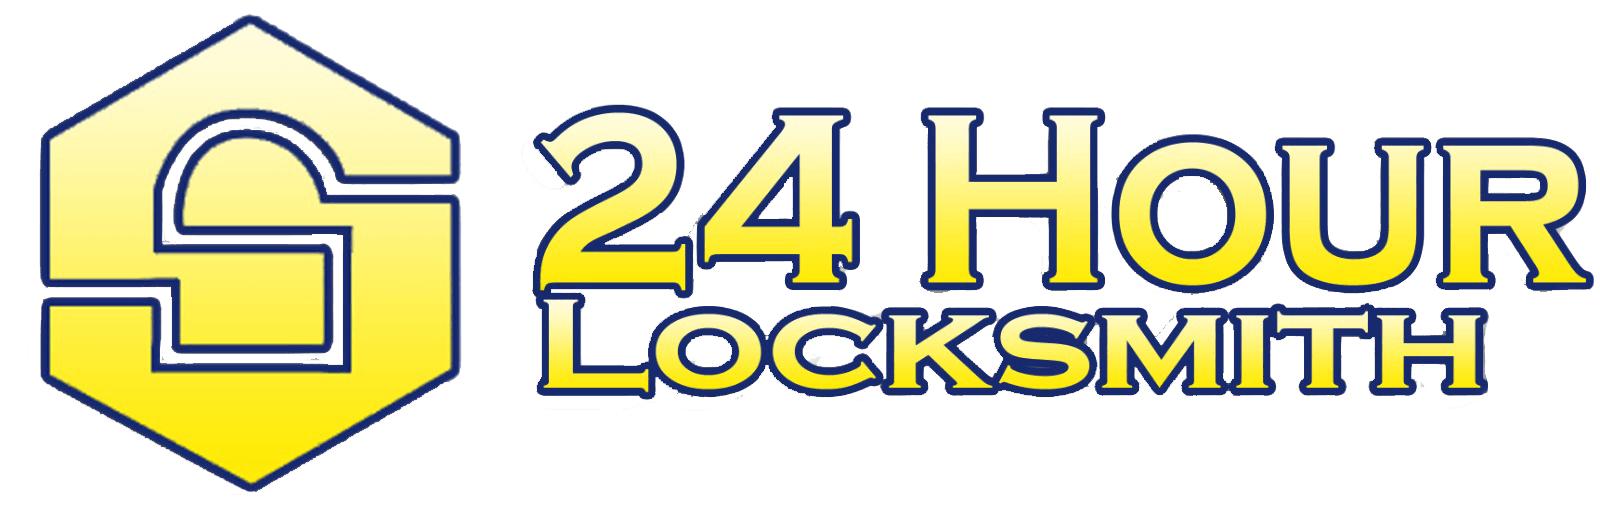 24 Hour Locksmith in Corpus Christi, TX